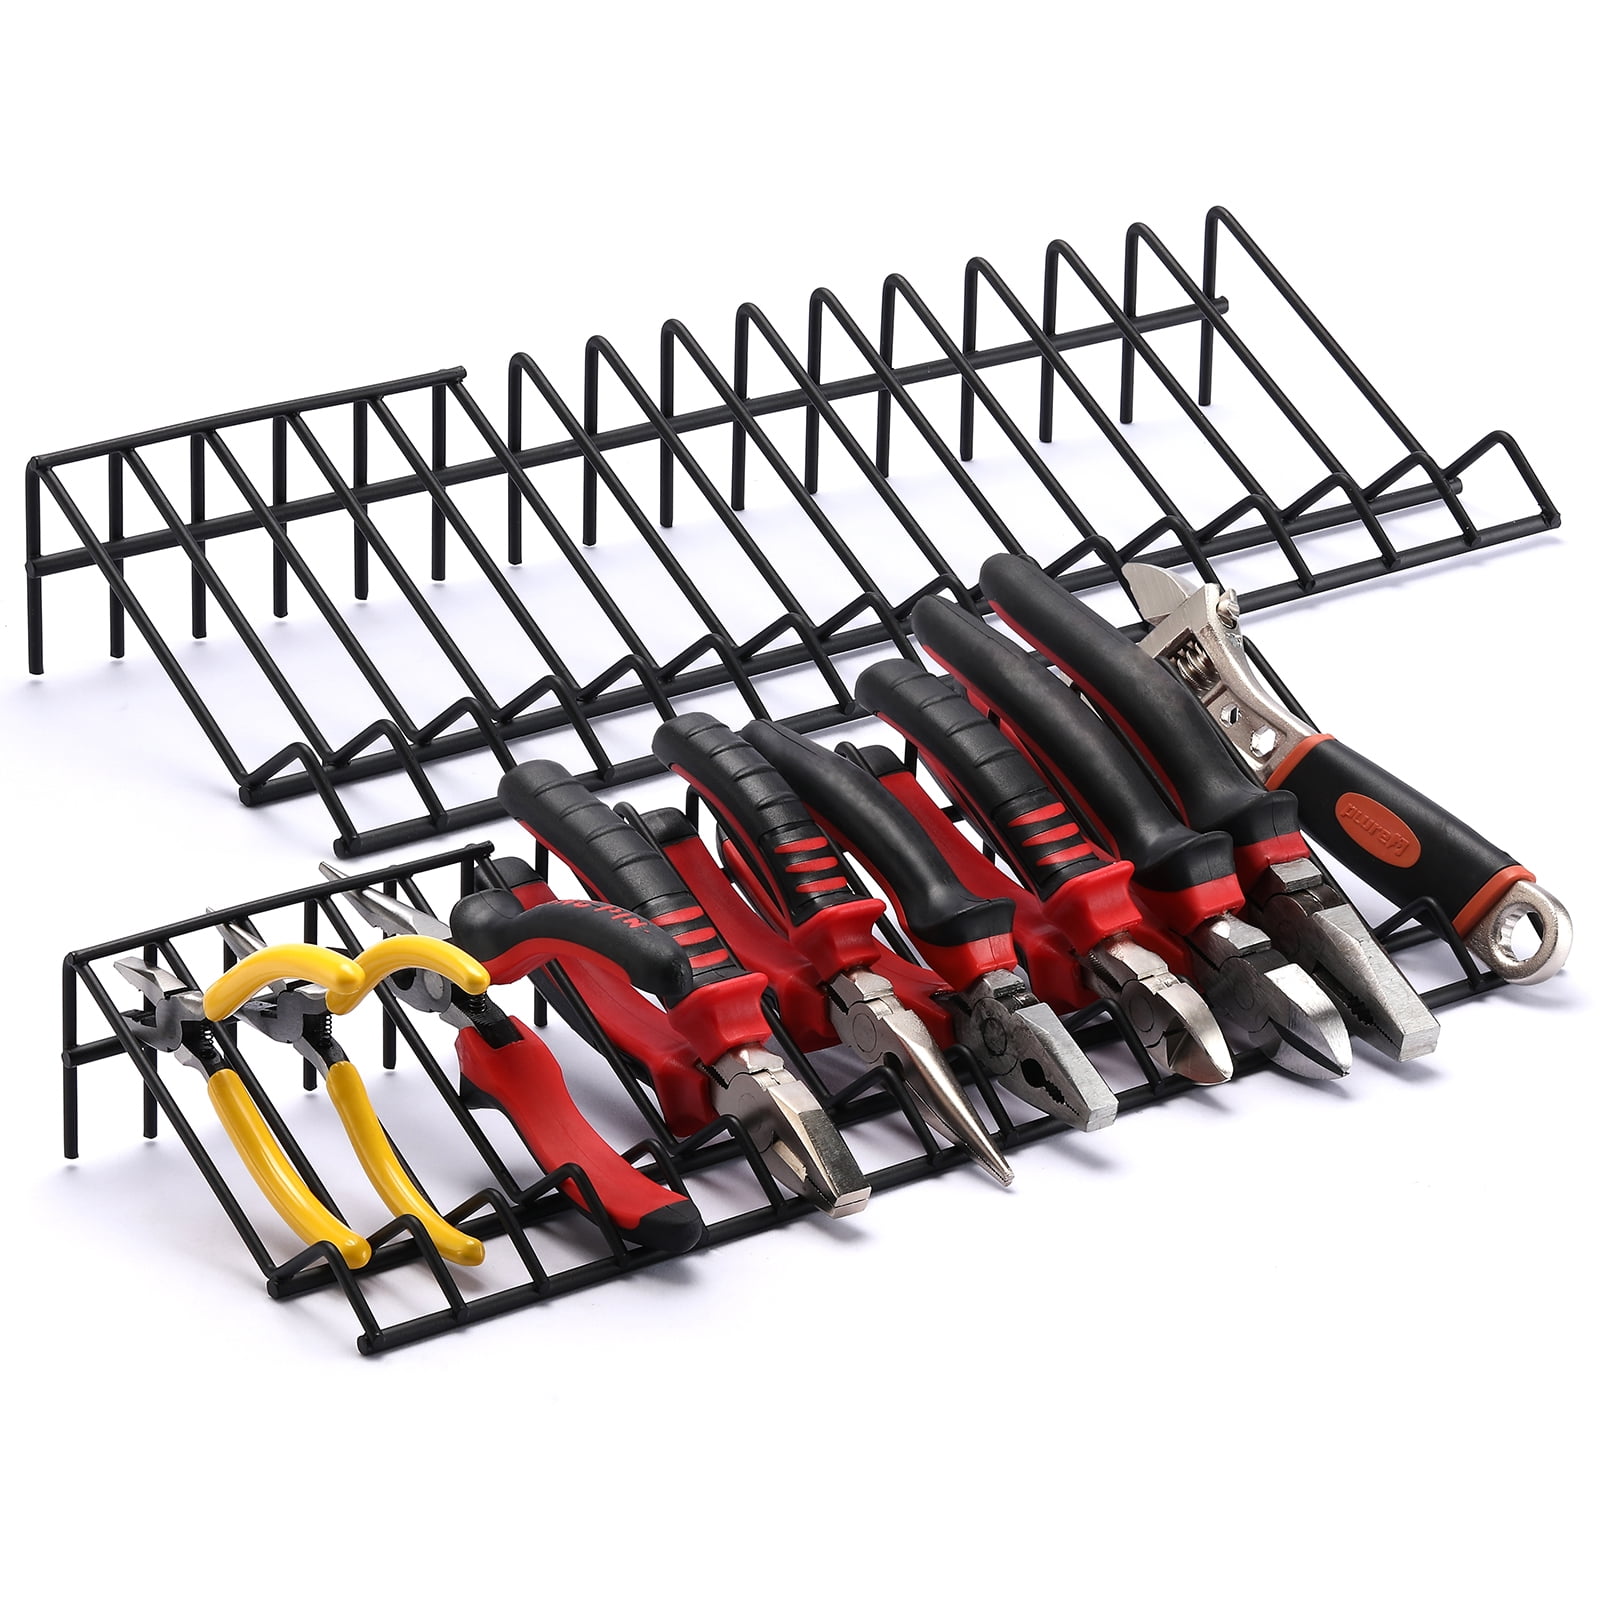 10 Tools Plier Organizer Durable & Long-Lasting Tool Storage - Hand Tools